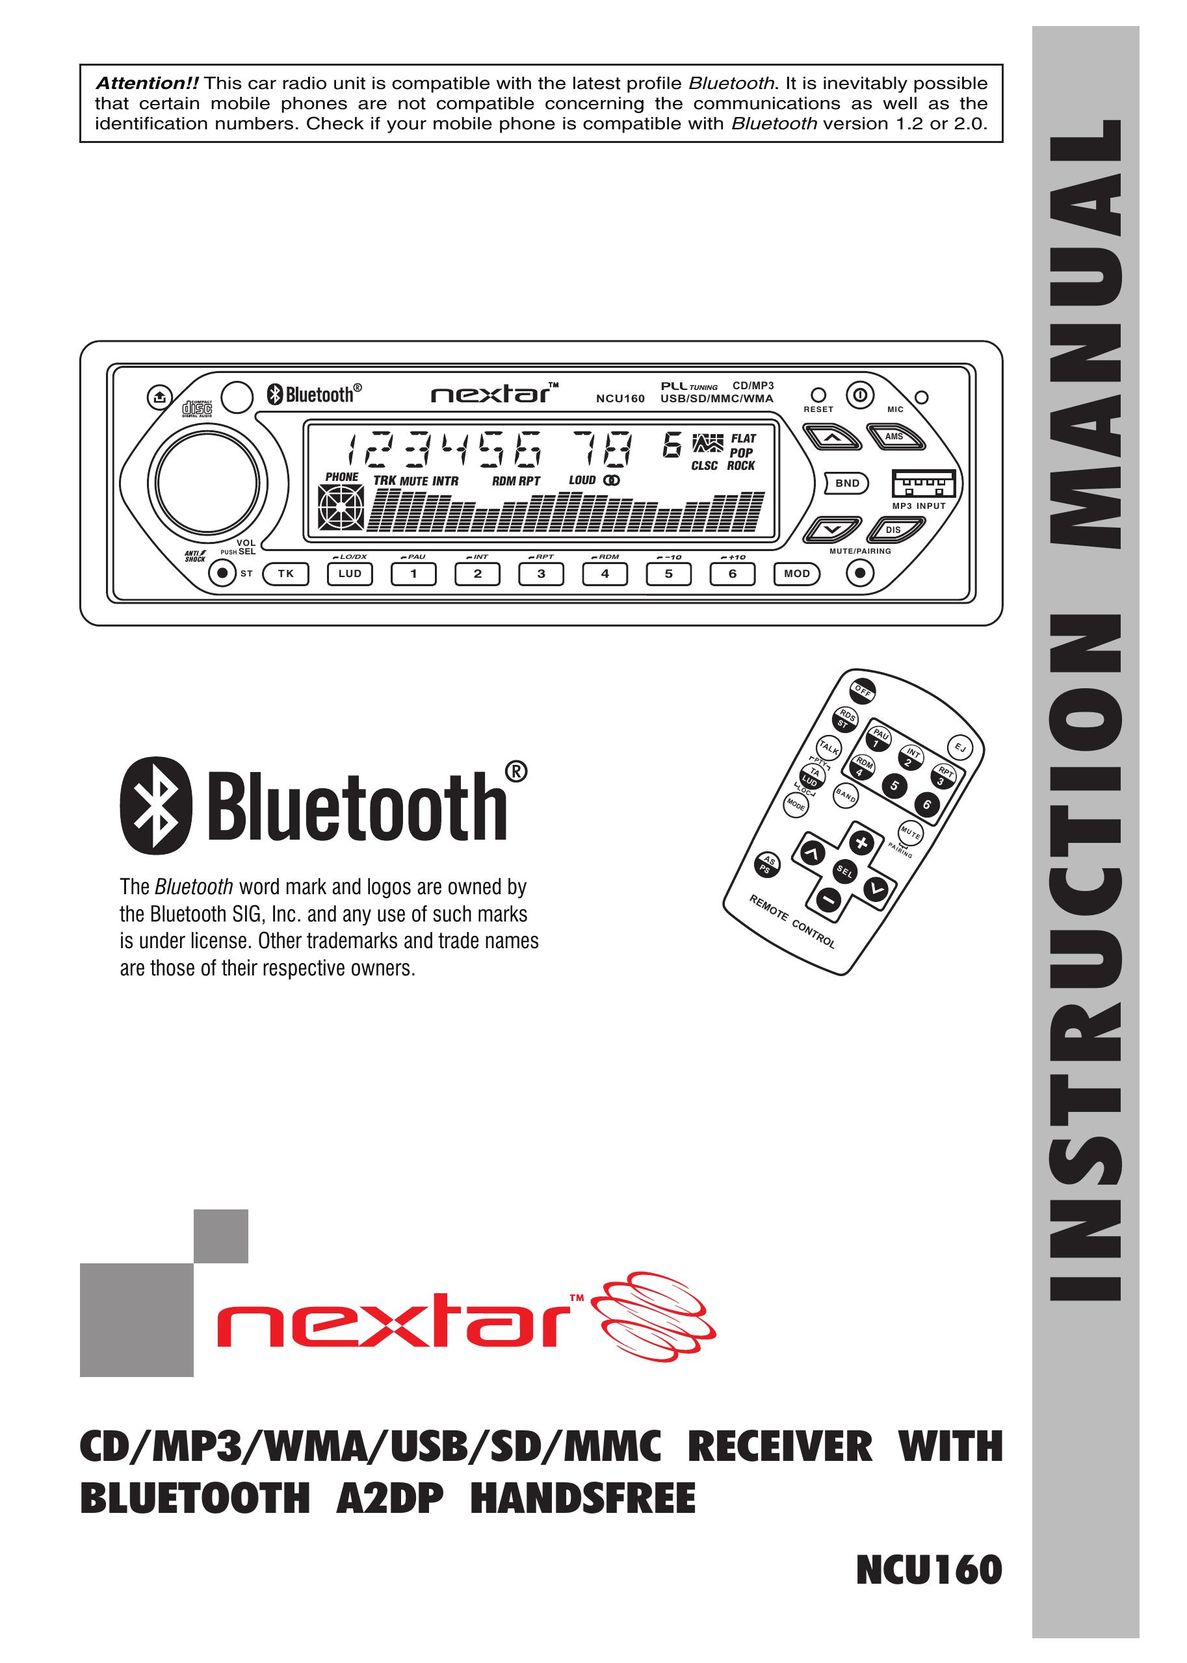 Nextar N CU 160 Car Stereo System User Manual